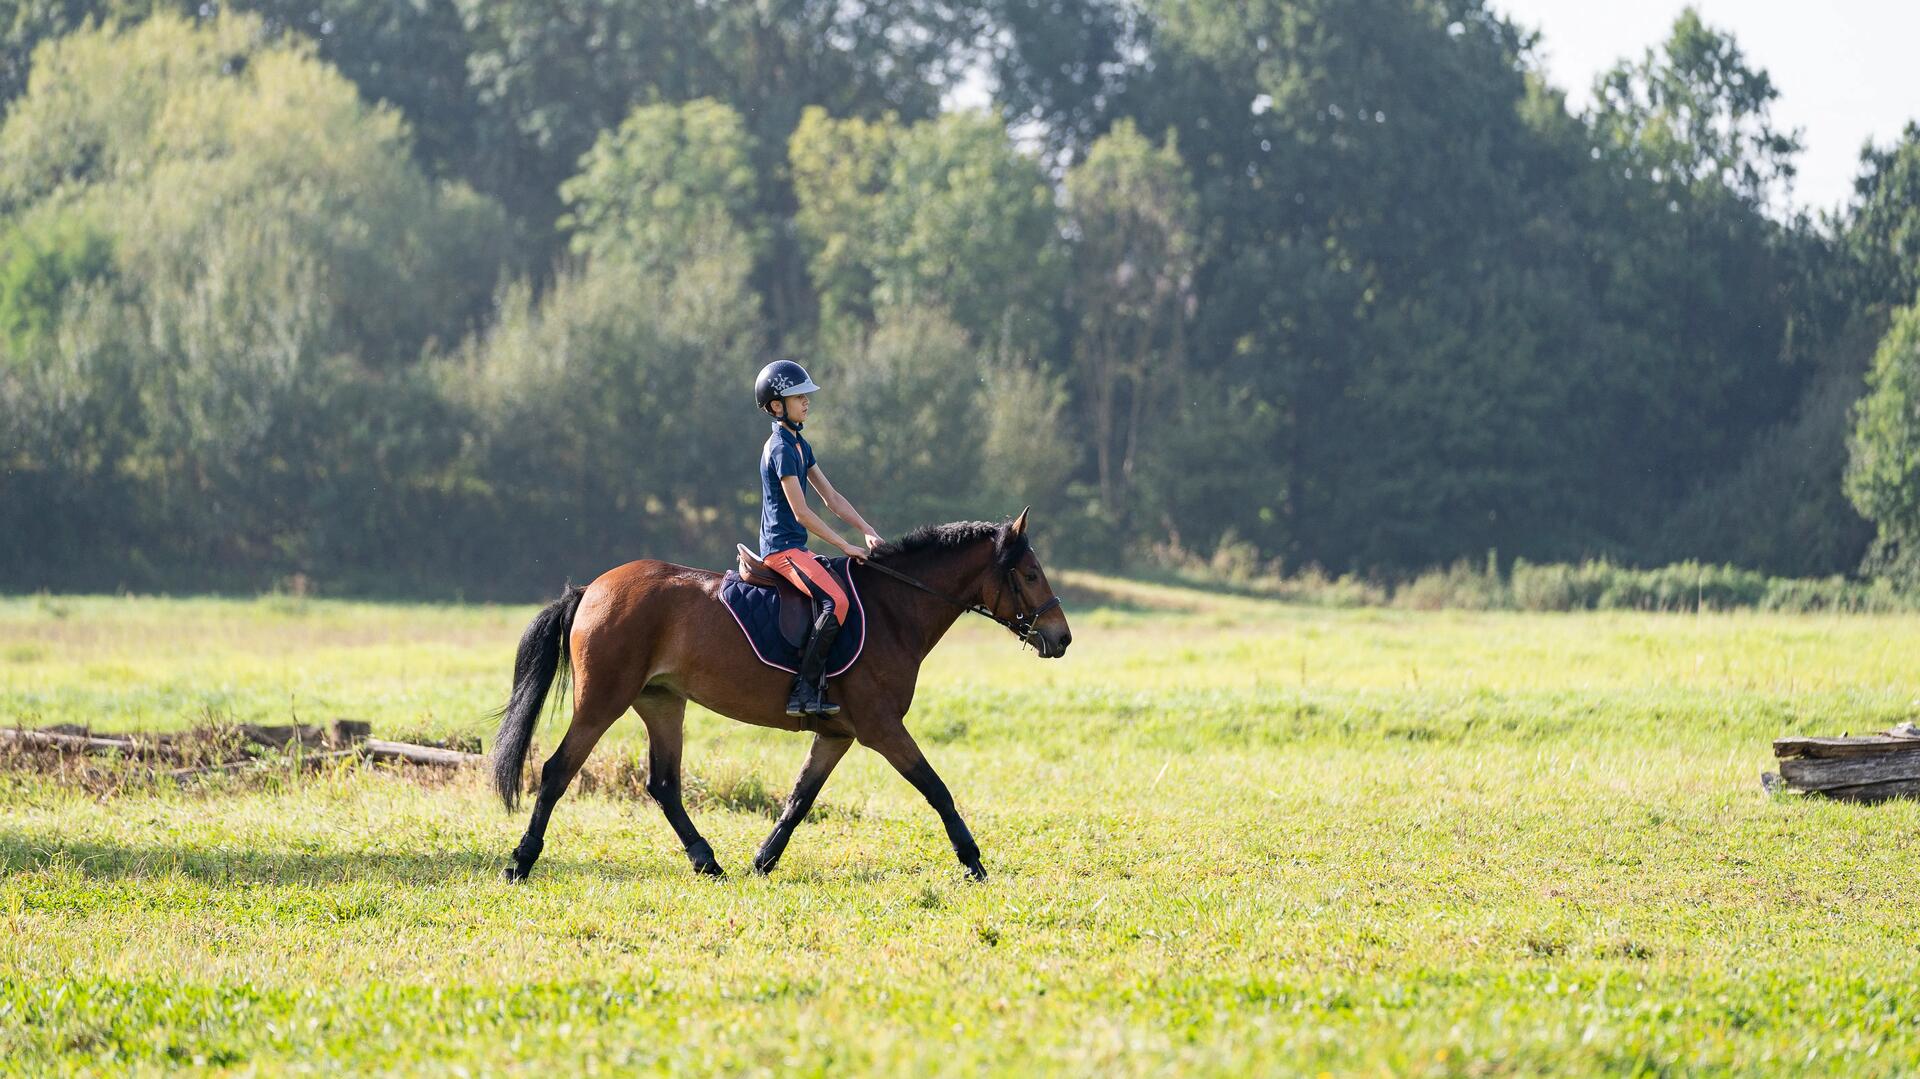 kid horseback riding in a field